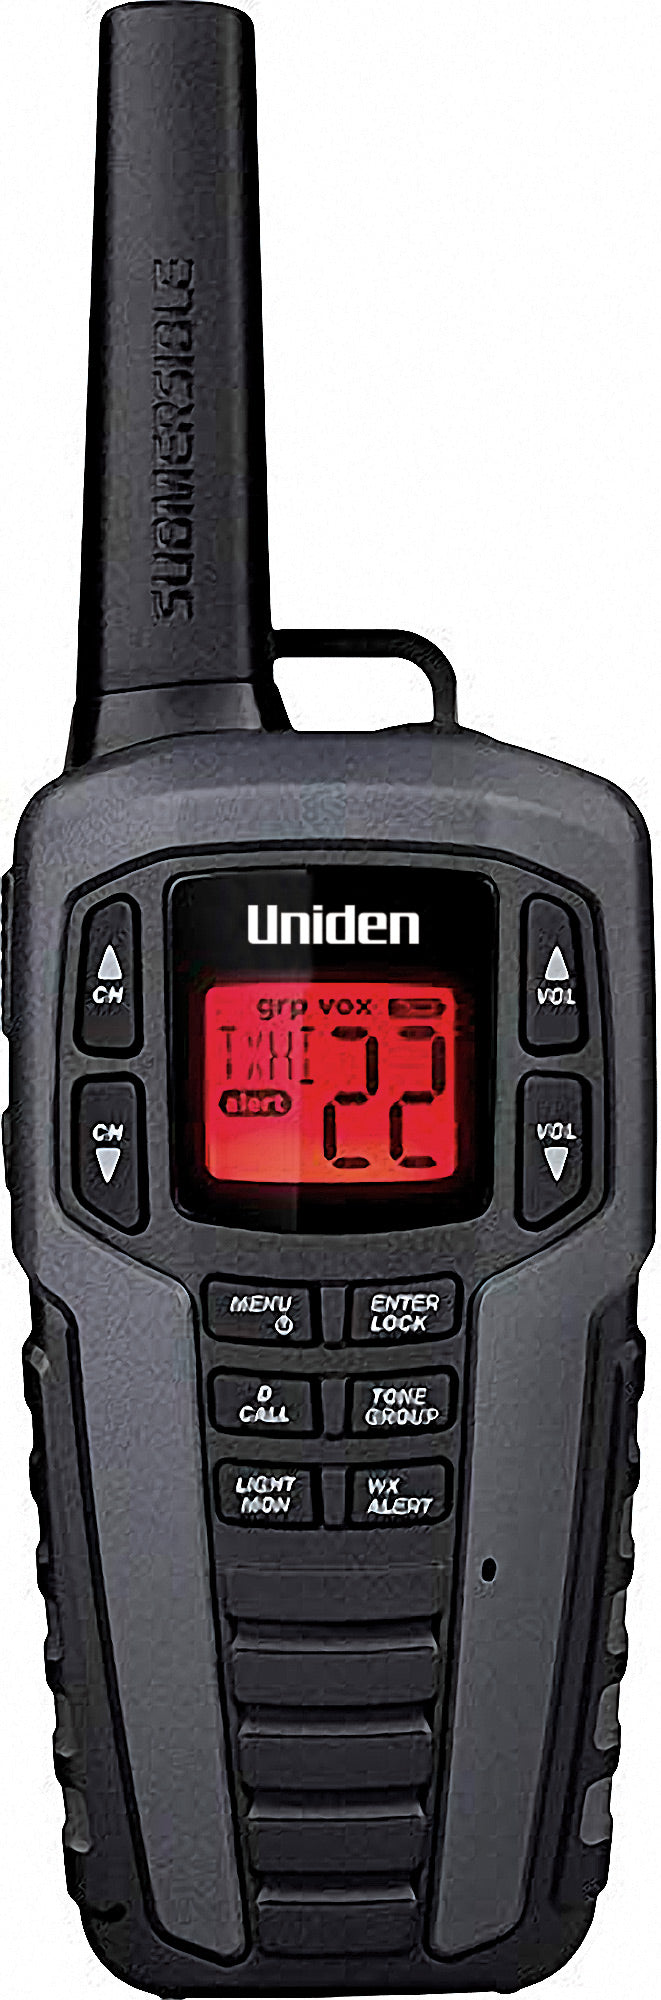 Uniden SX507-2CKHS Up to 50 Mile Range Two-Way Radio Walkie Talkies W Dual Charging Cradle, Waterproof, Floats, 22 Channels, 142 Privacy Codes, NOAA W - 2